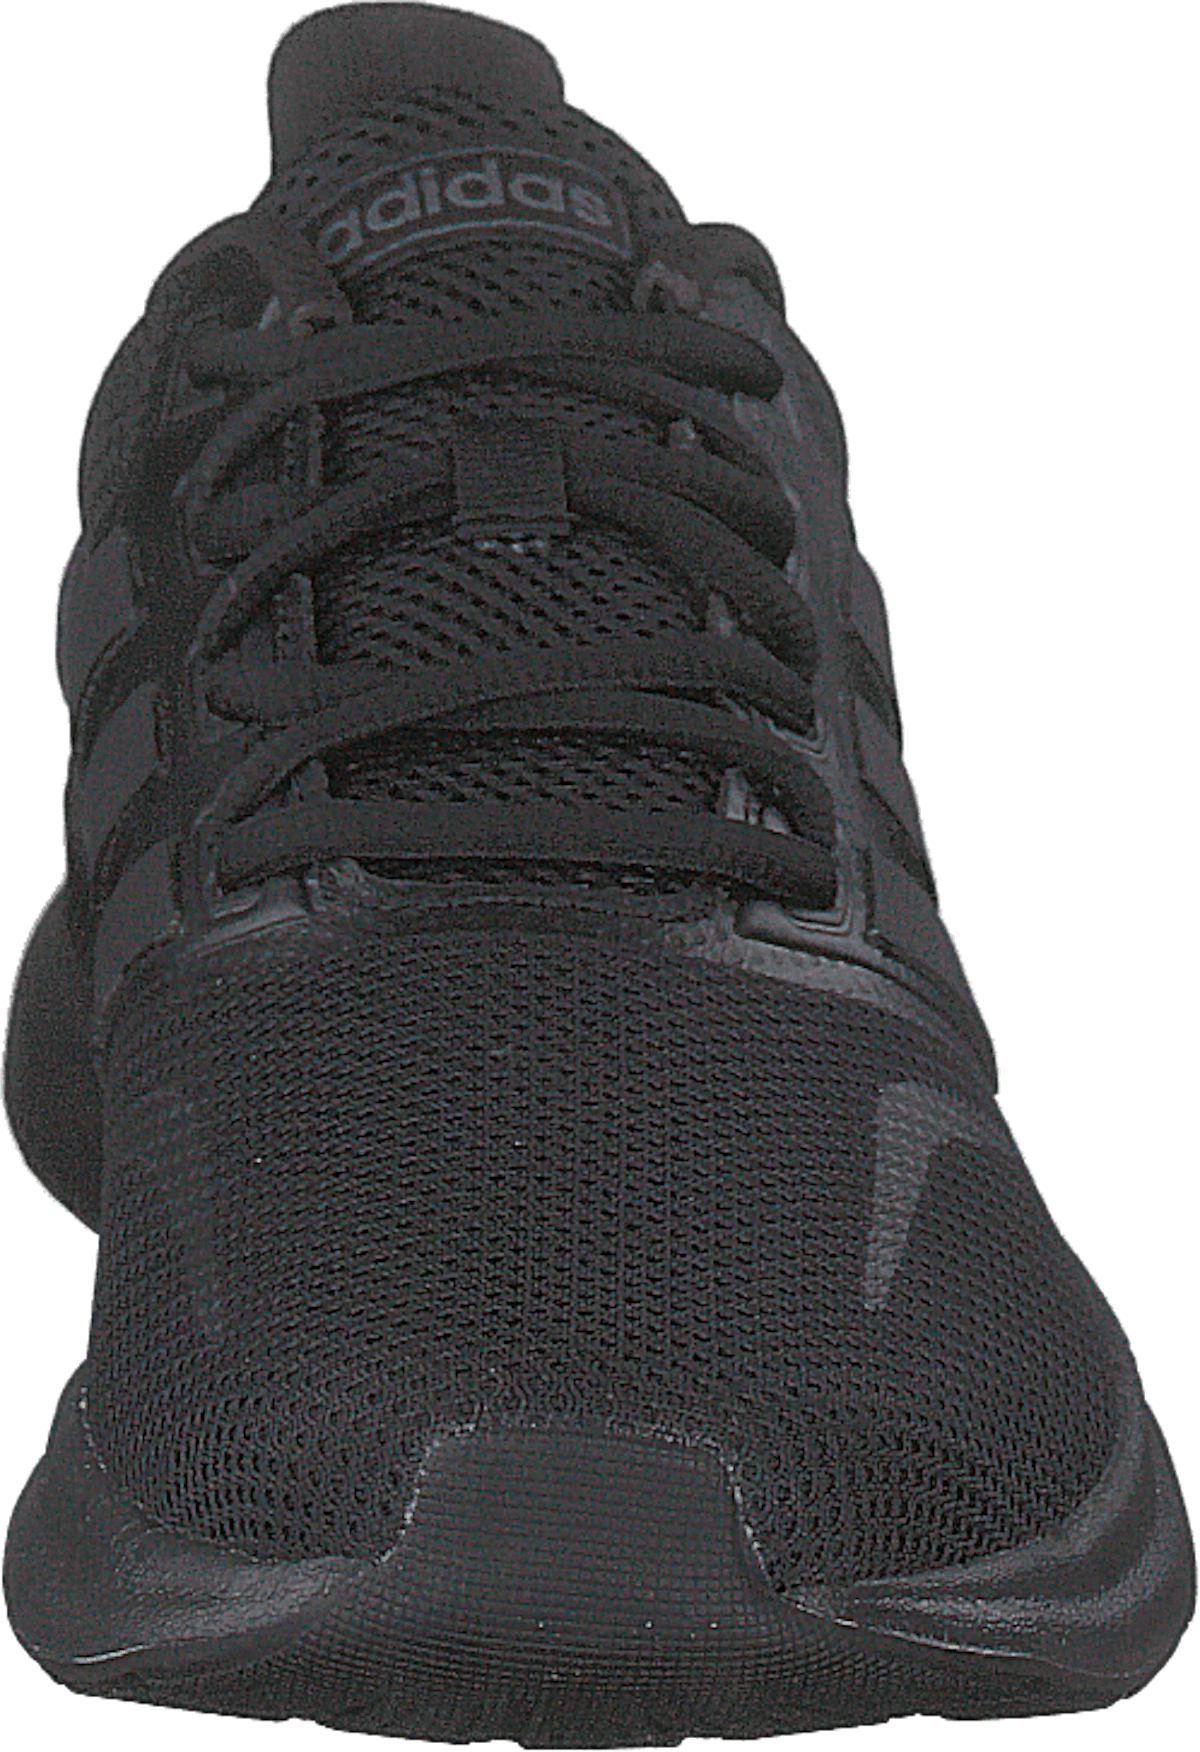 Runfalcon Shoes Core Black / Core Black / Core Black